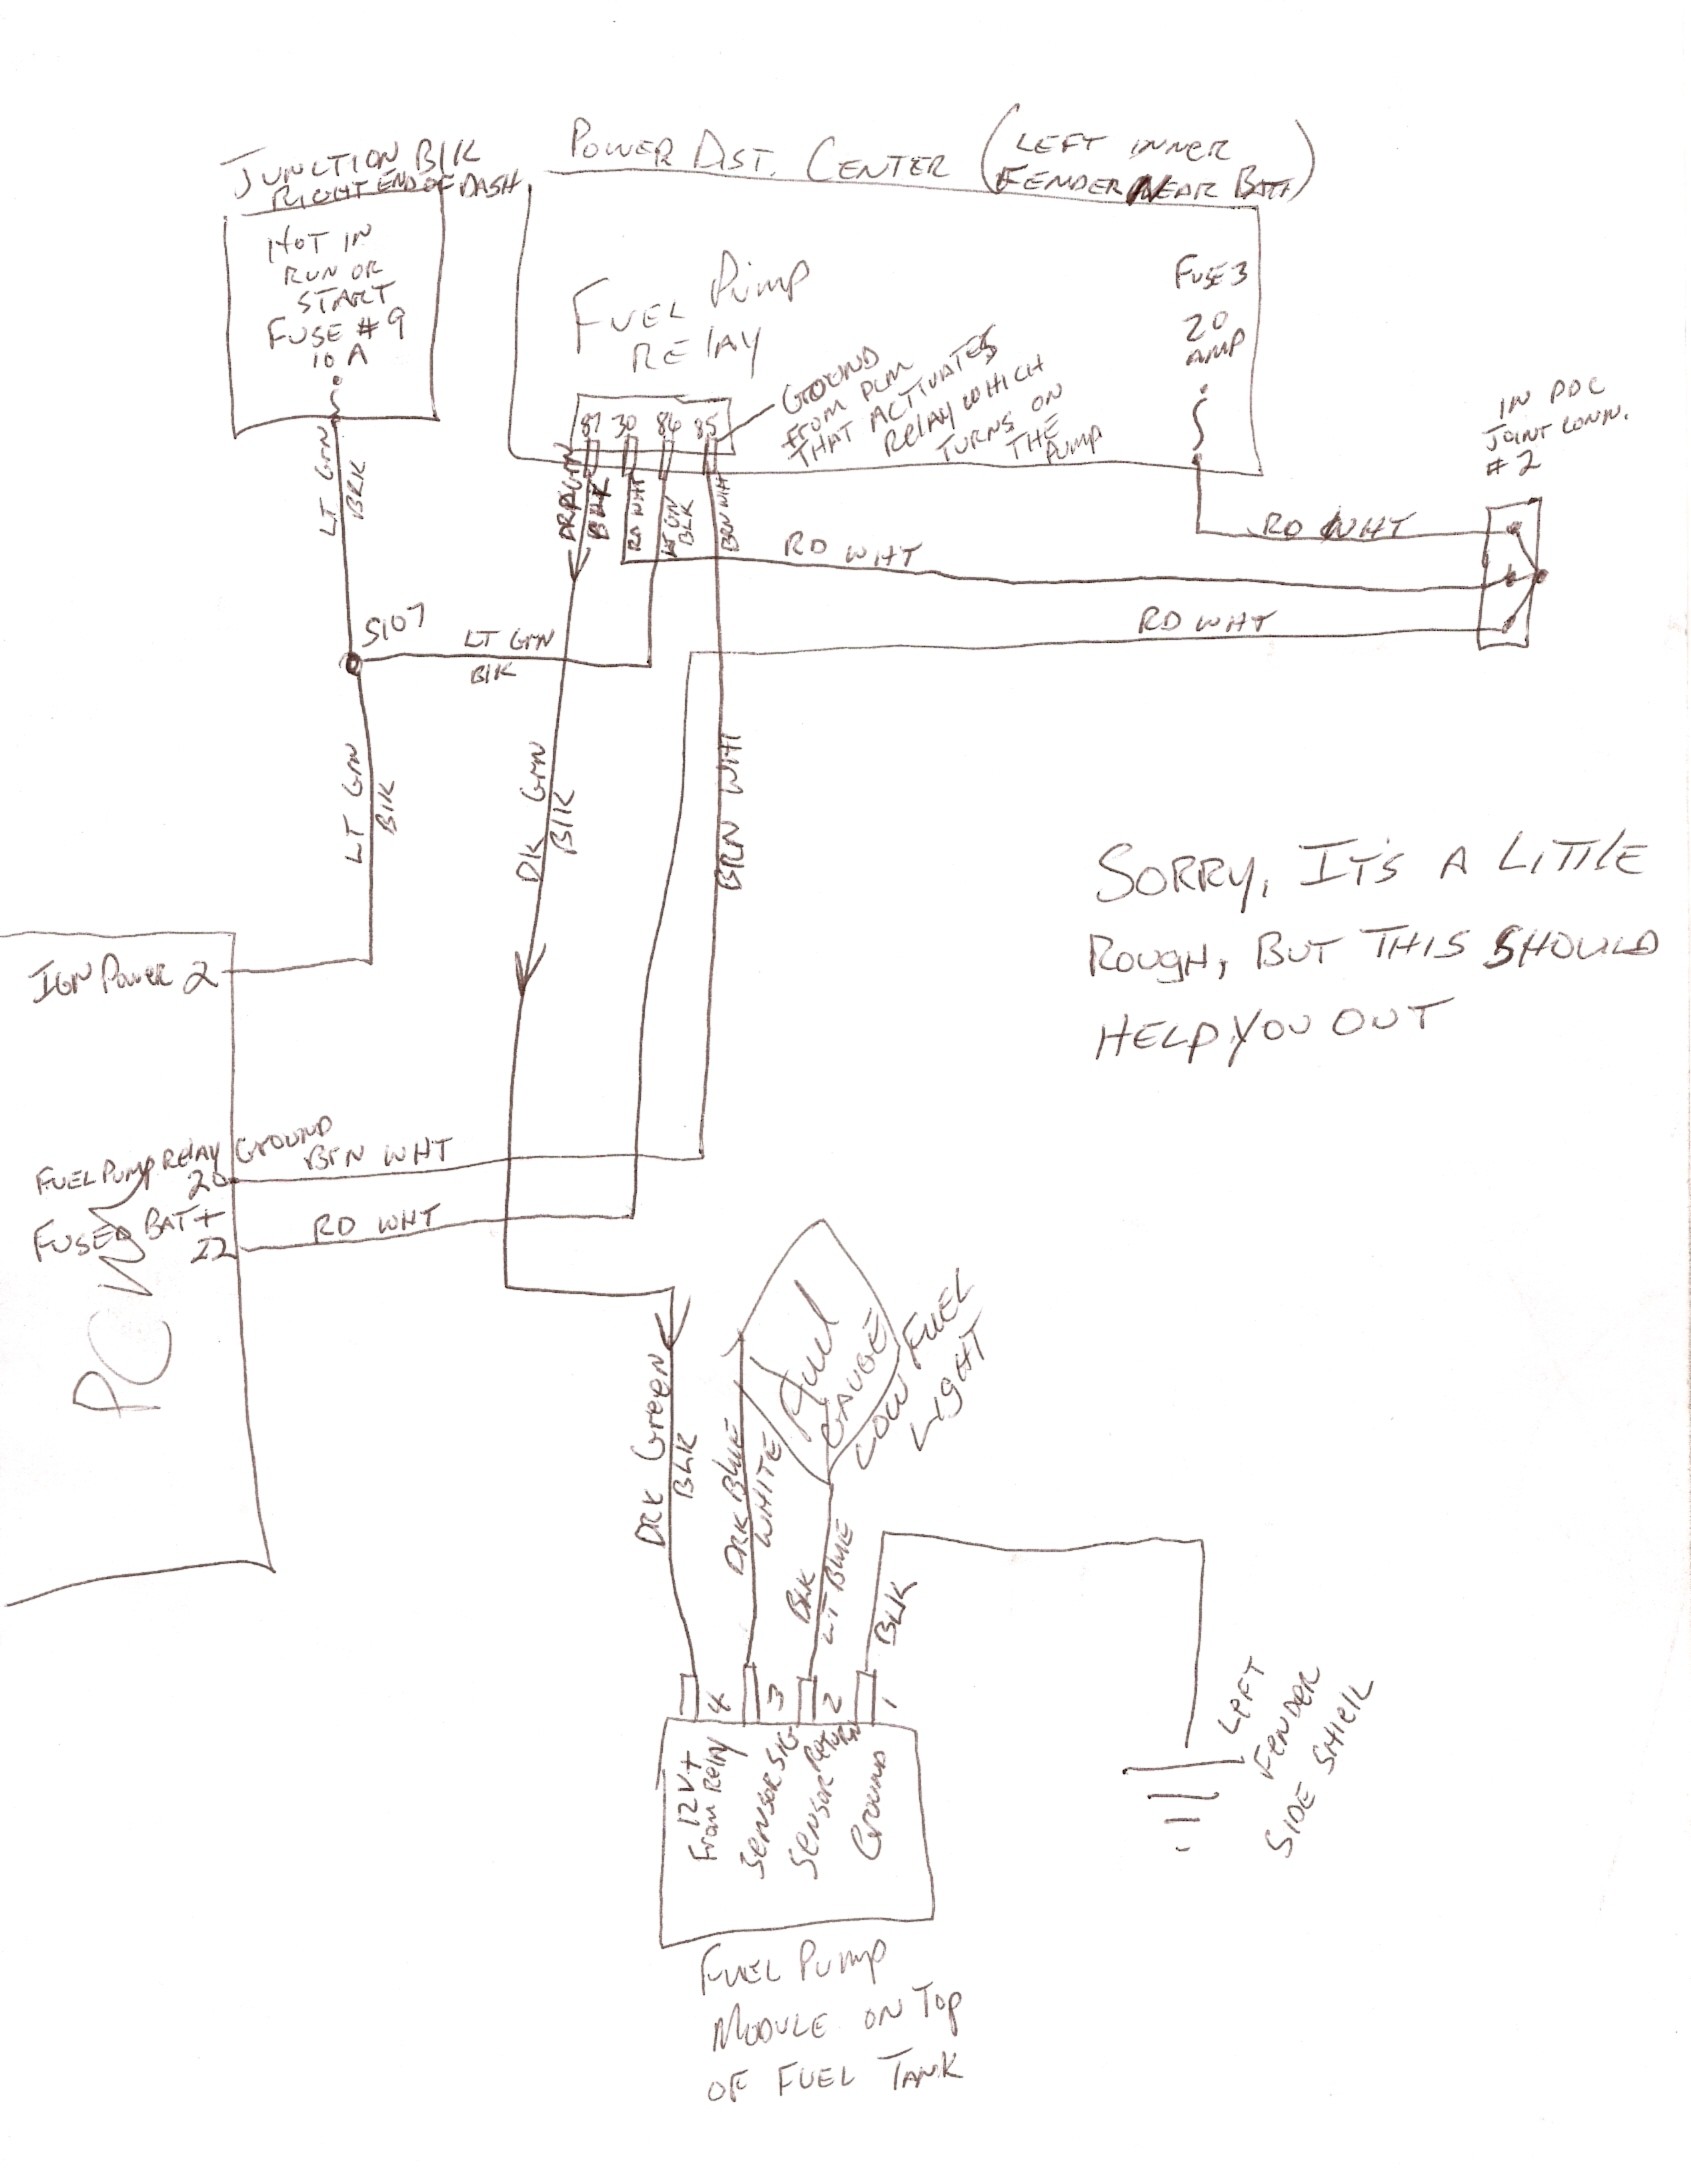 allen bradley 1734-0b4 wiring diagram